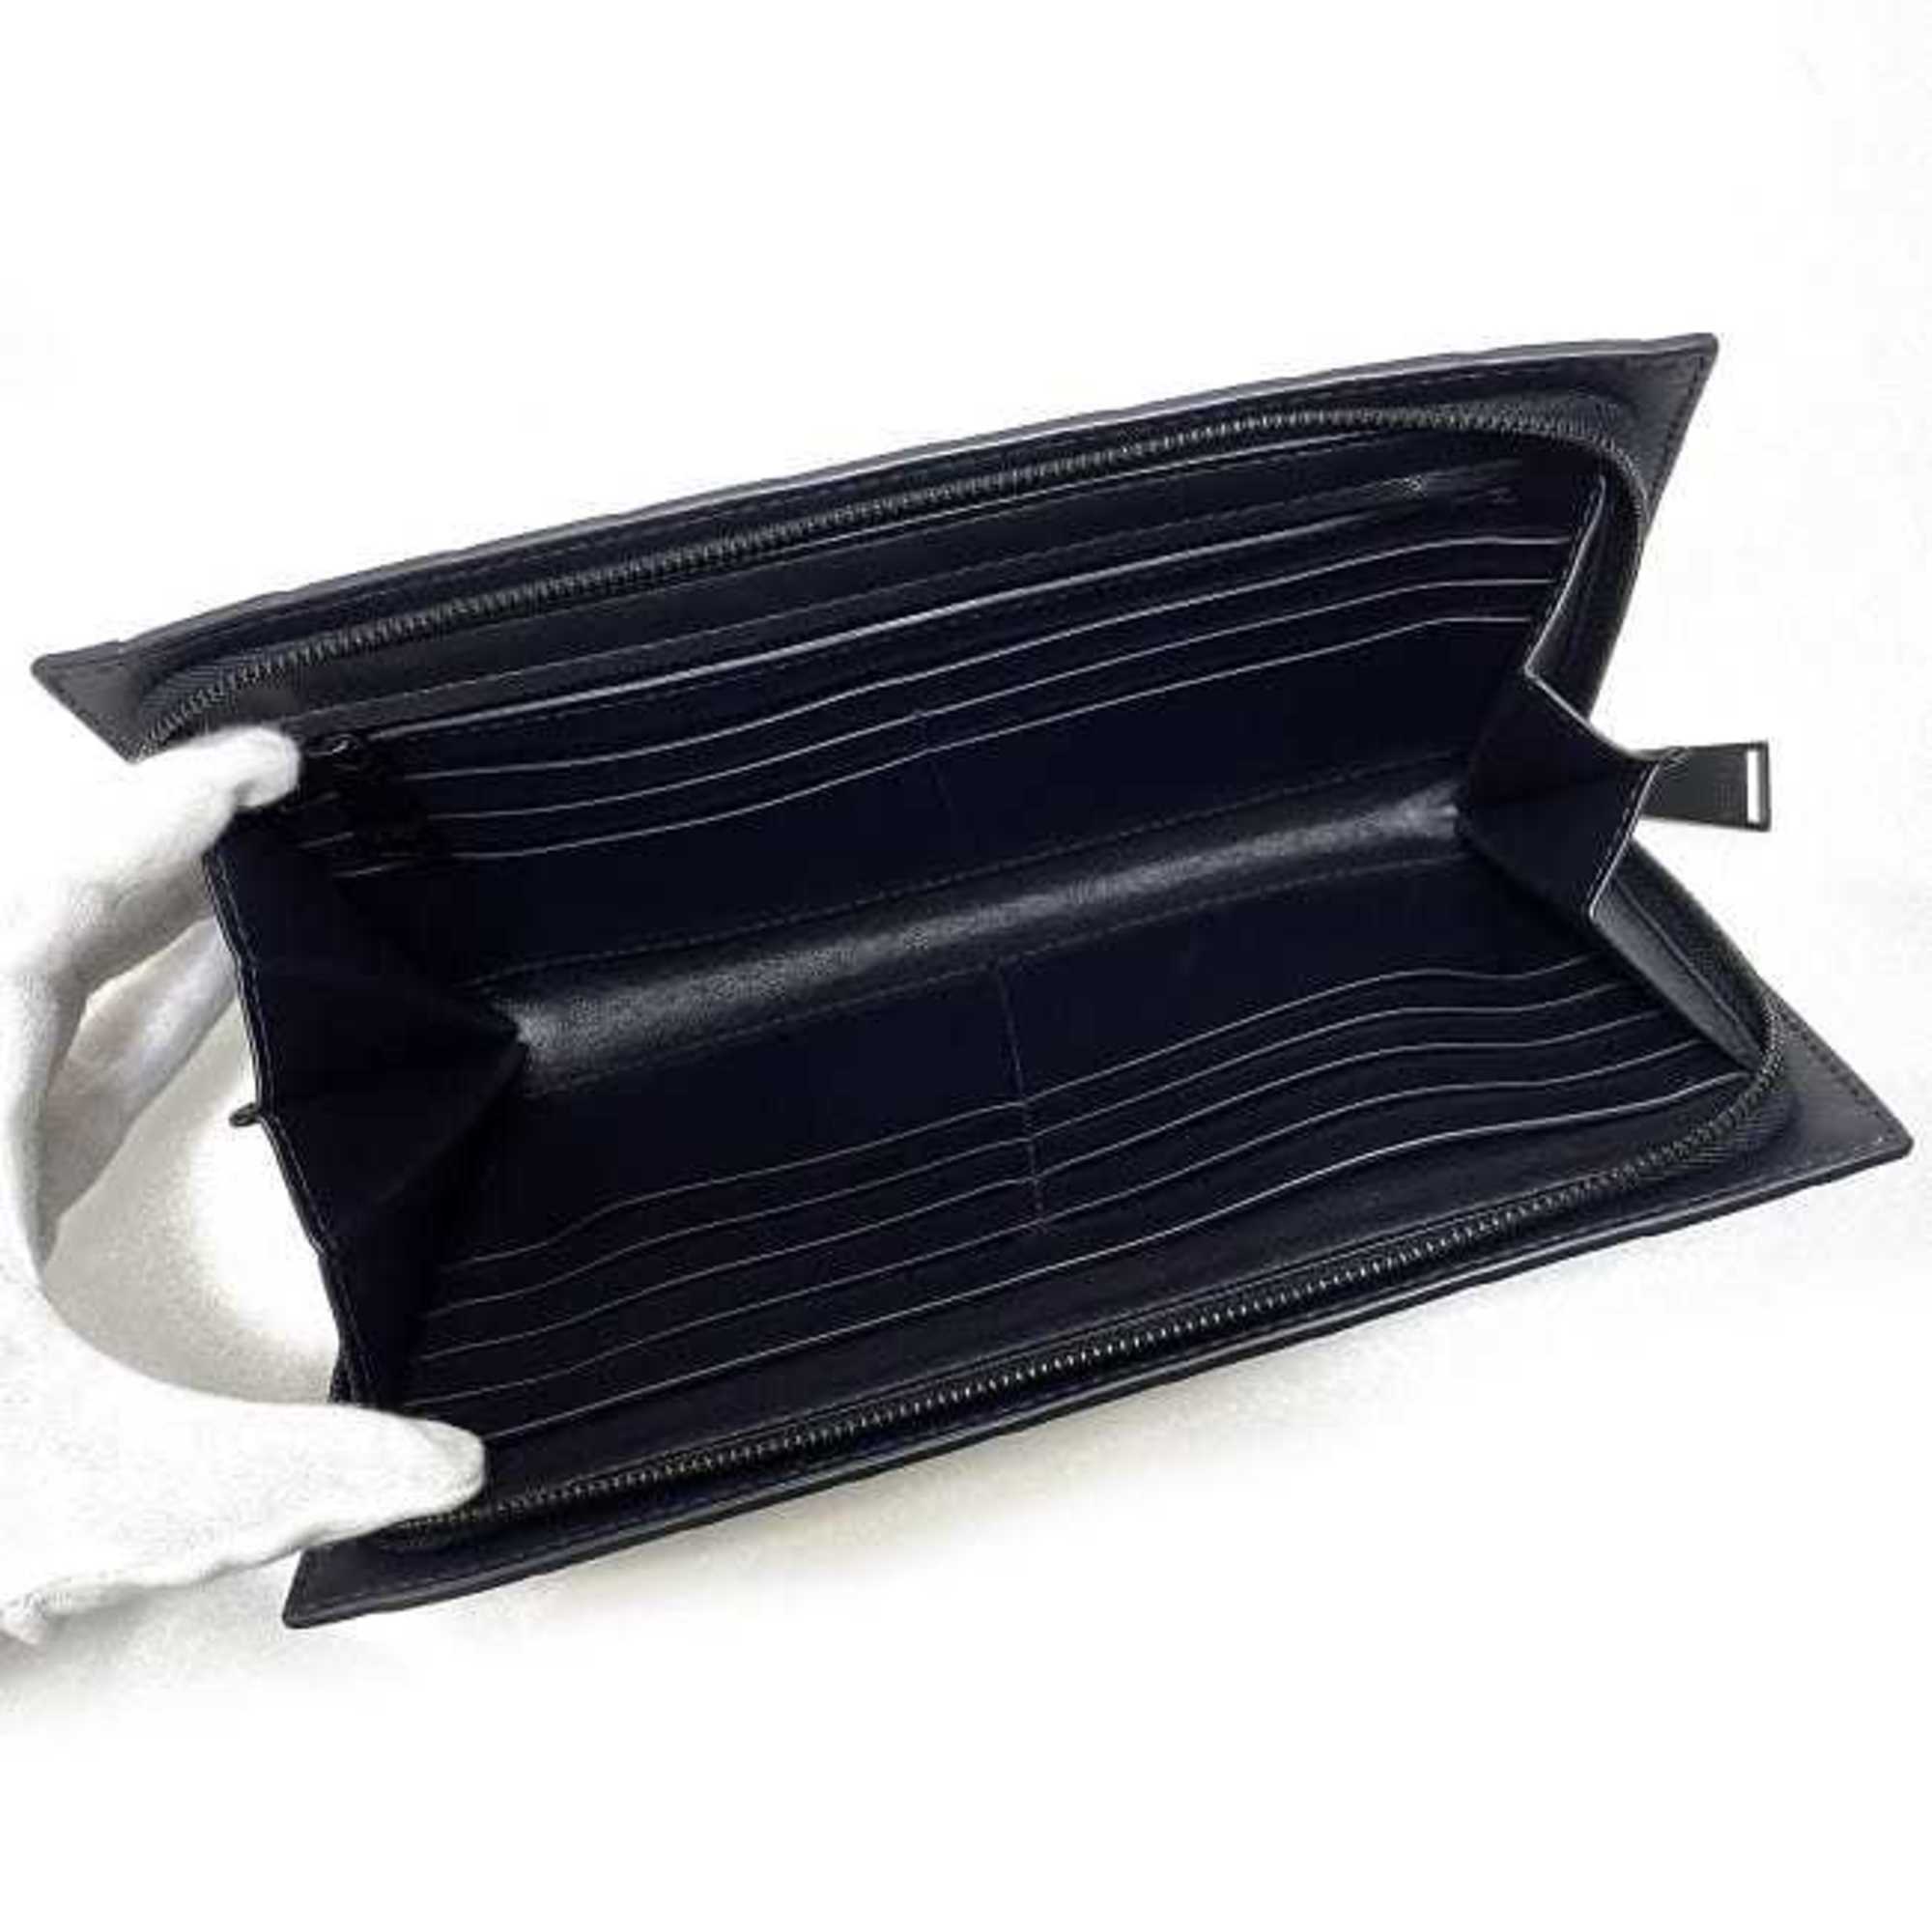 Bottega Veneta round long wallet black matte metal fittings intrecciato leather BOTTEGA VENETA men's 1